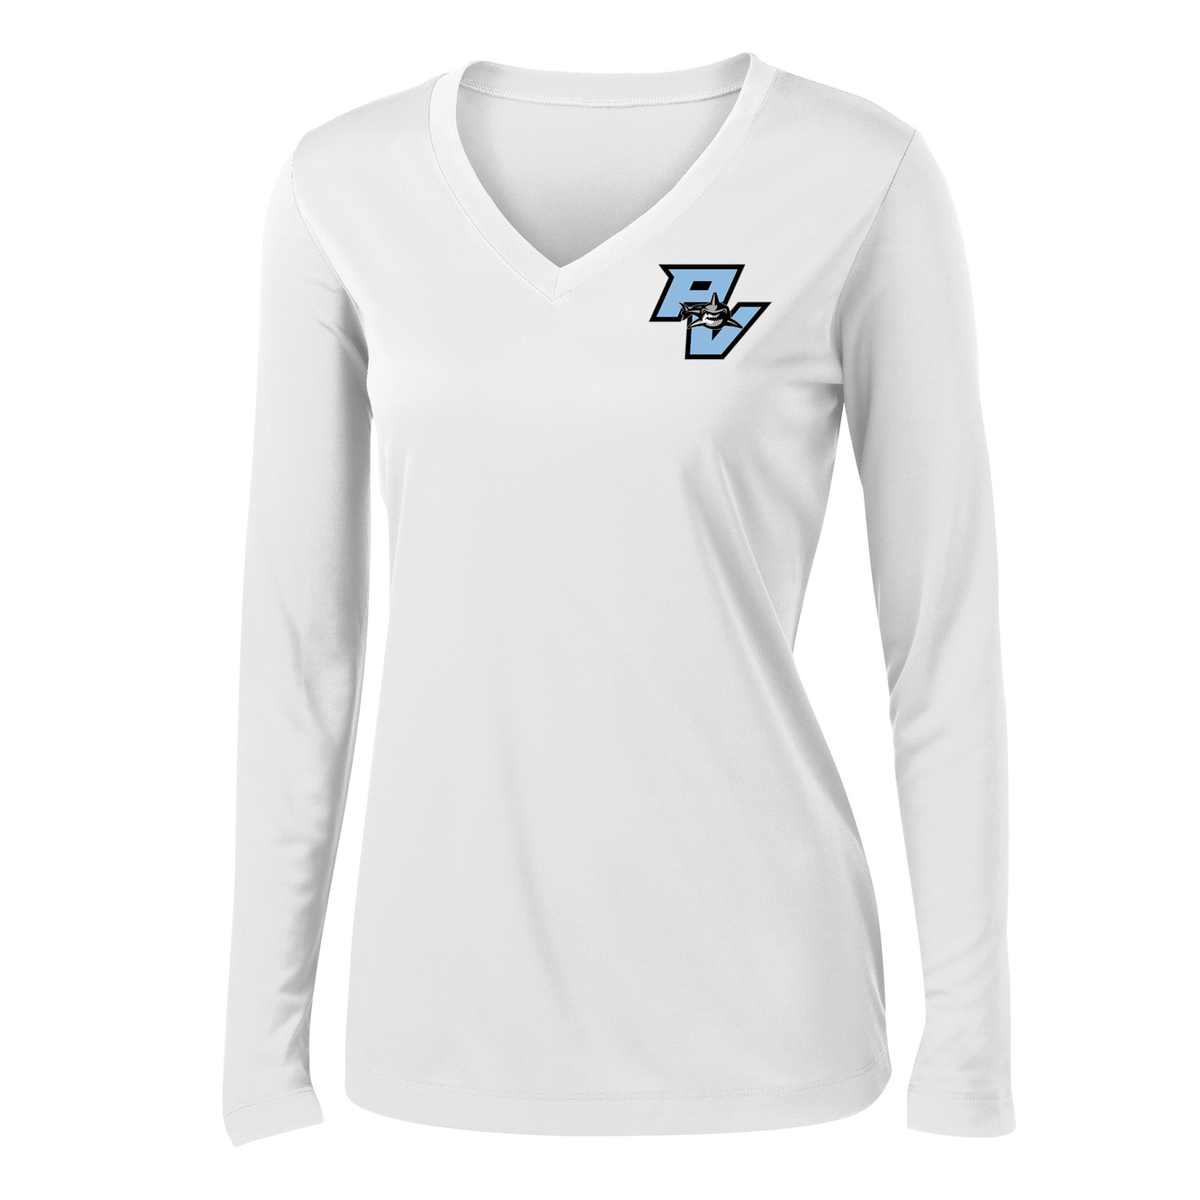 Ponte Vedra JAWS Lacrosse Women's Long Sleeve Performance Shirt